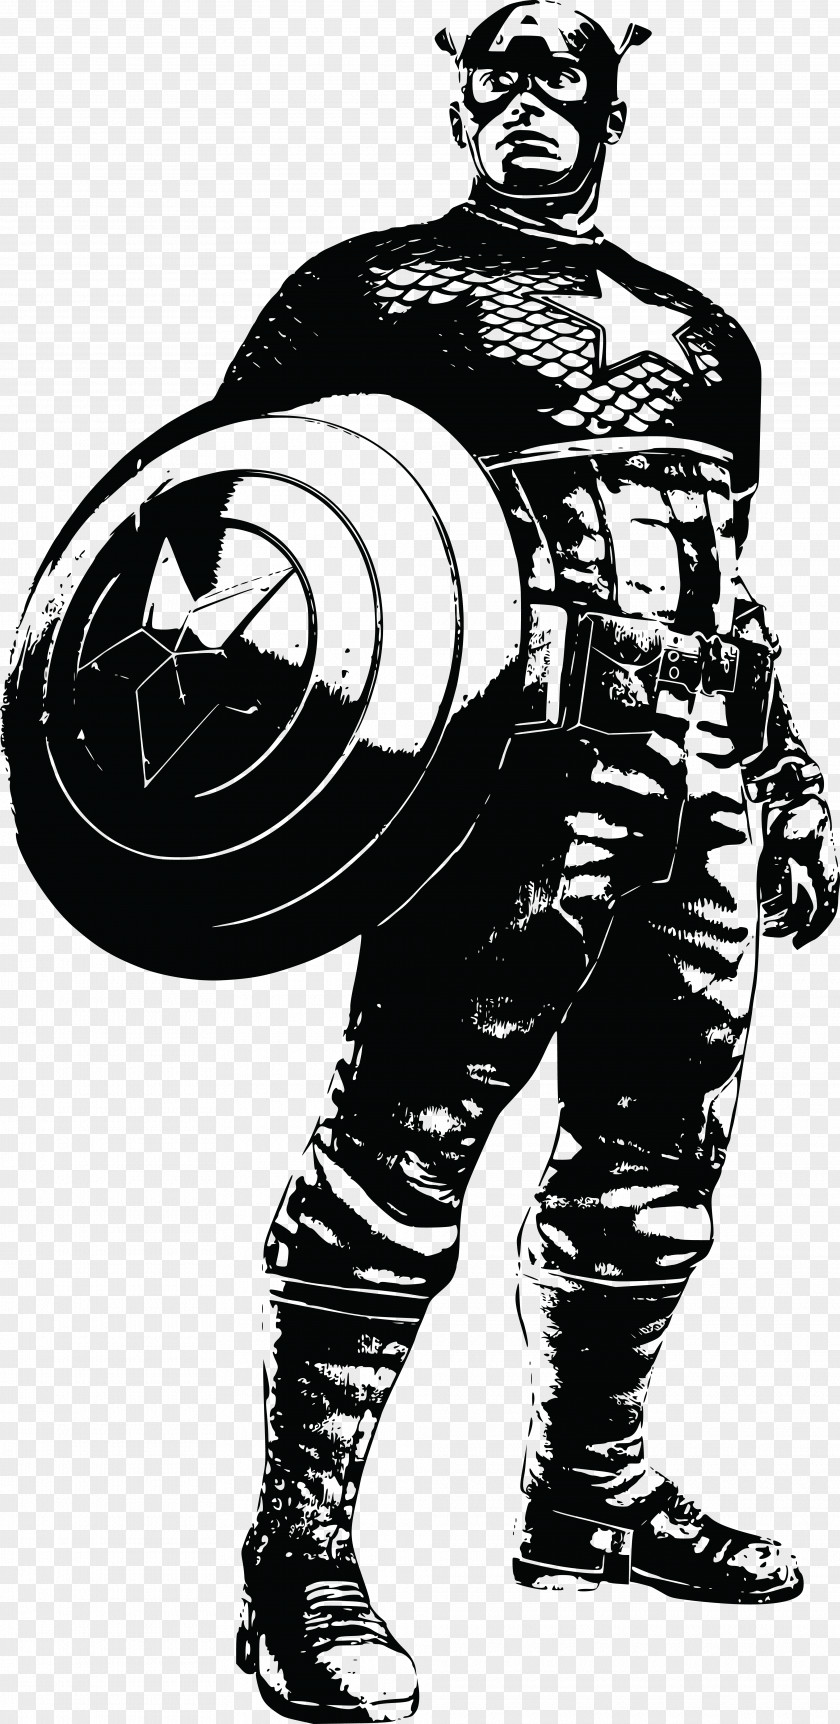 Captain America Clip Art Image Stock.xchng Illustration PNG